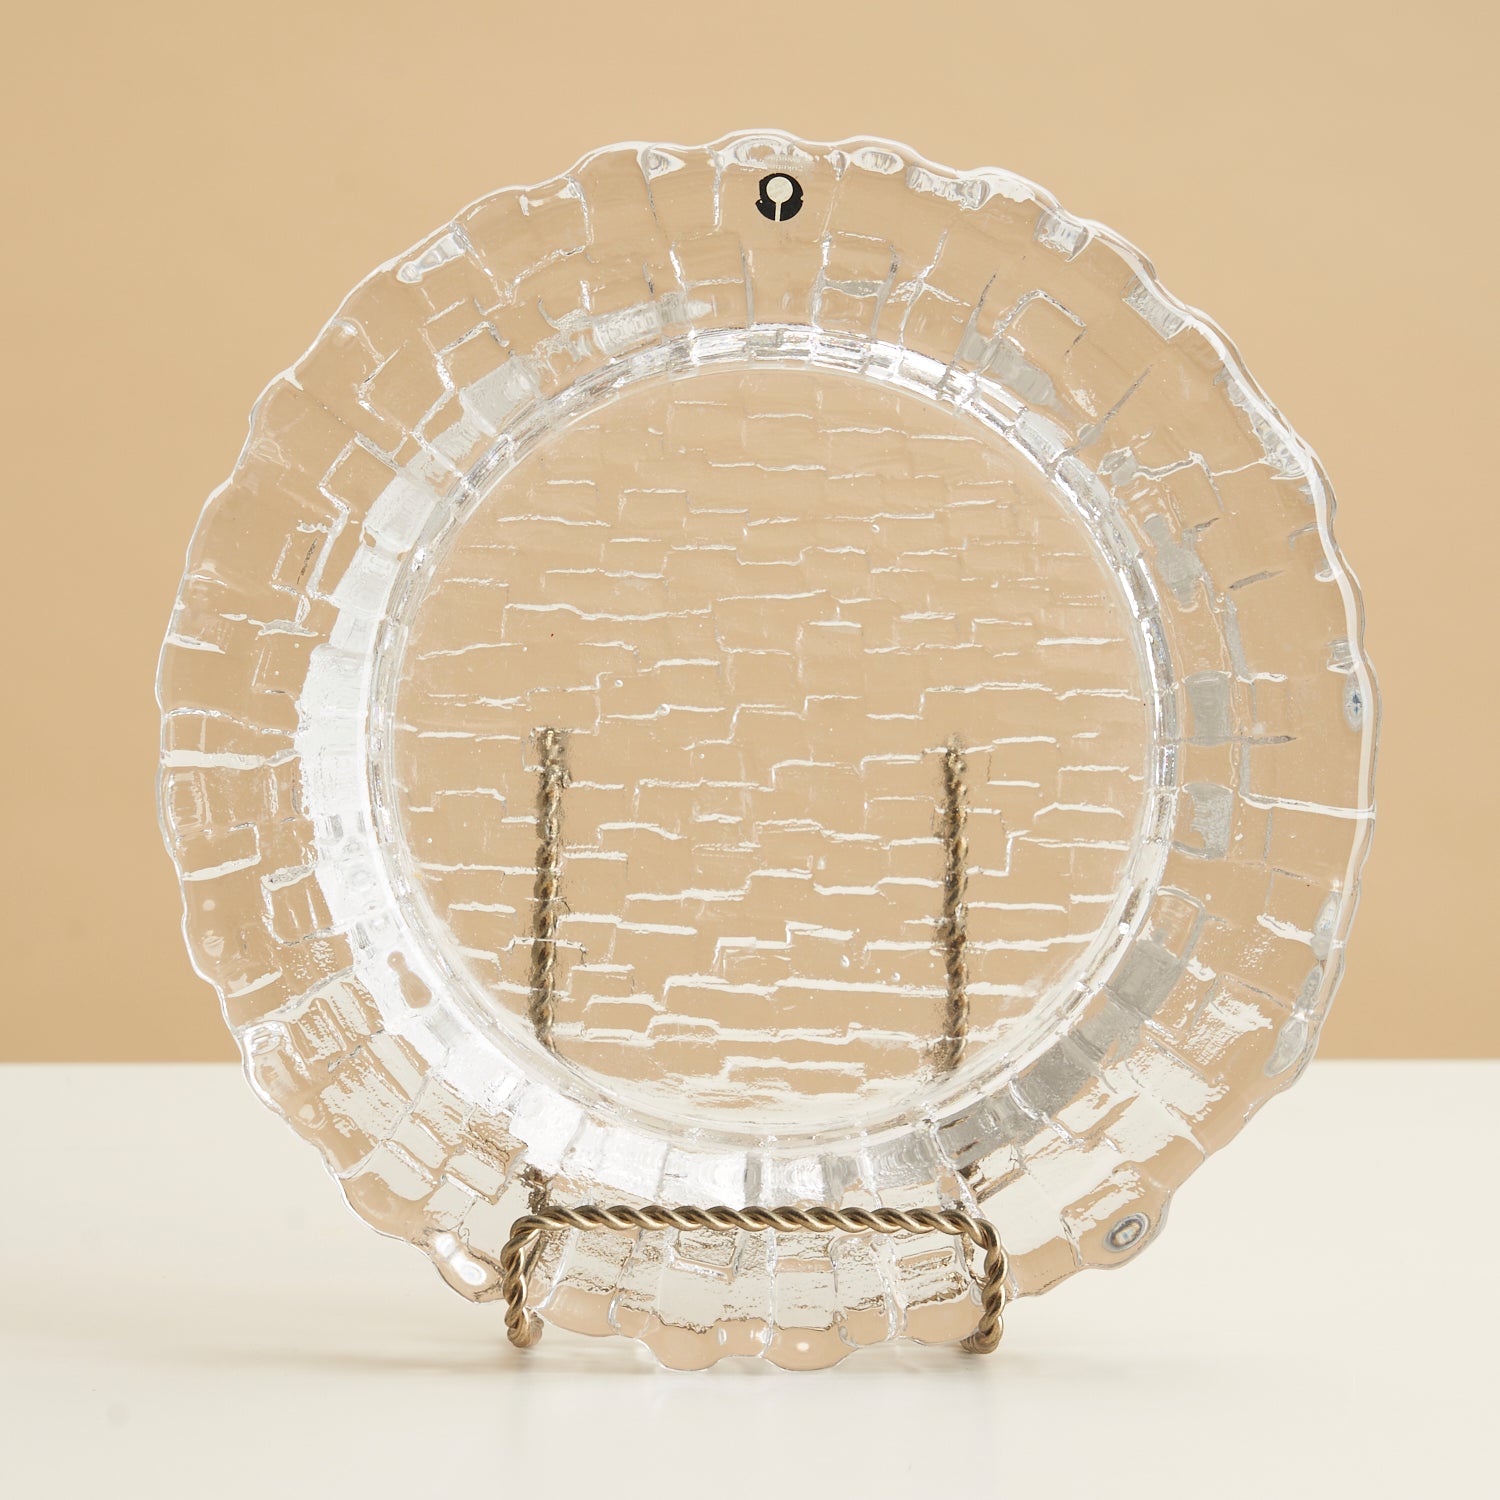 Decorative Glass Dish by Pukeberg